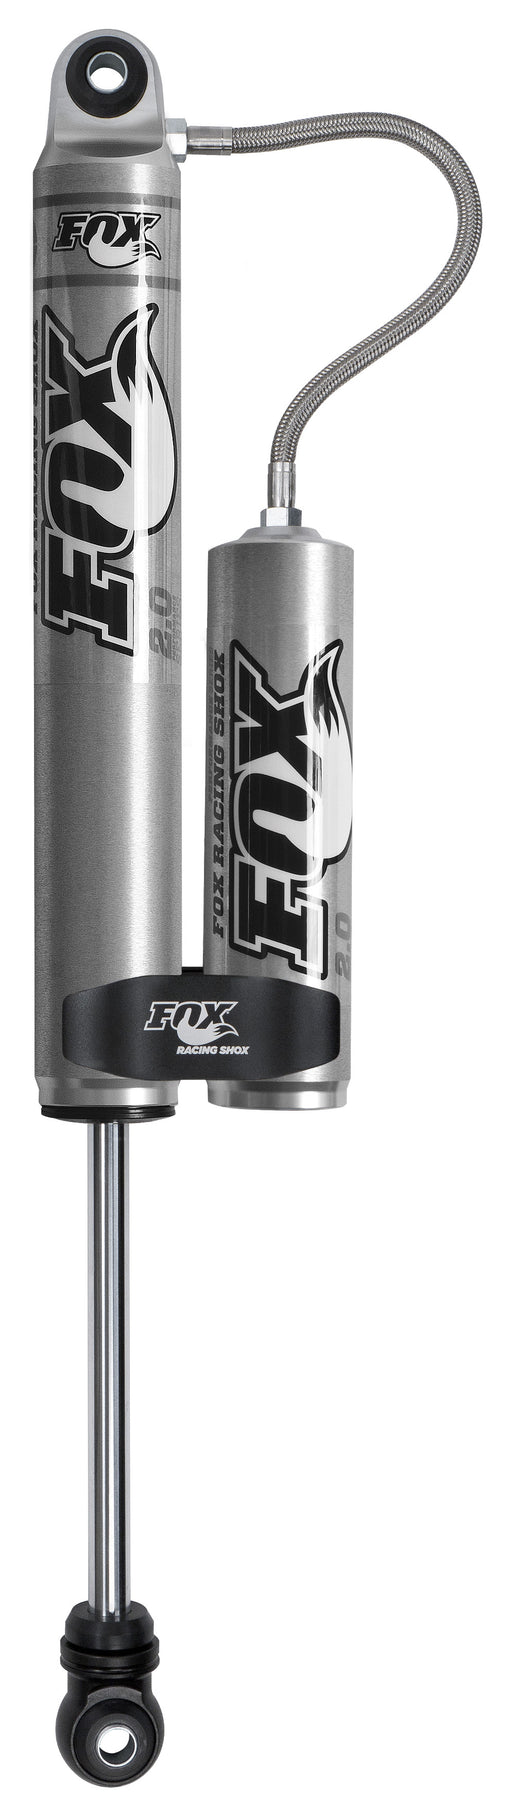 Fox Racing Shox 985-24-011 Performance Series Shock Absorber